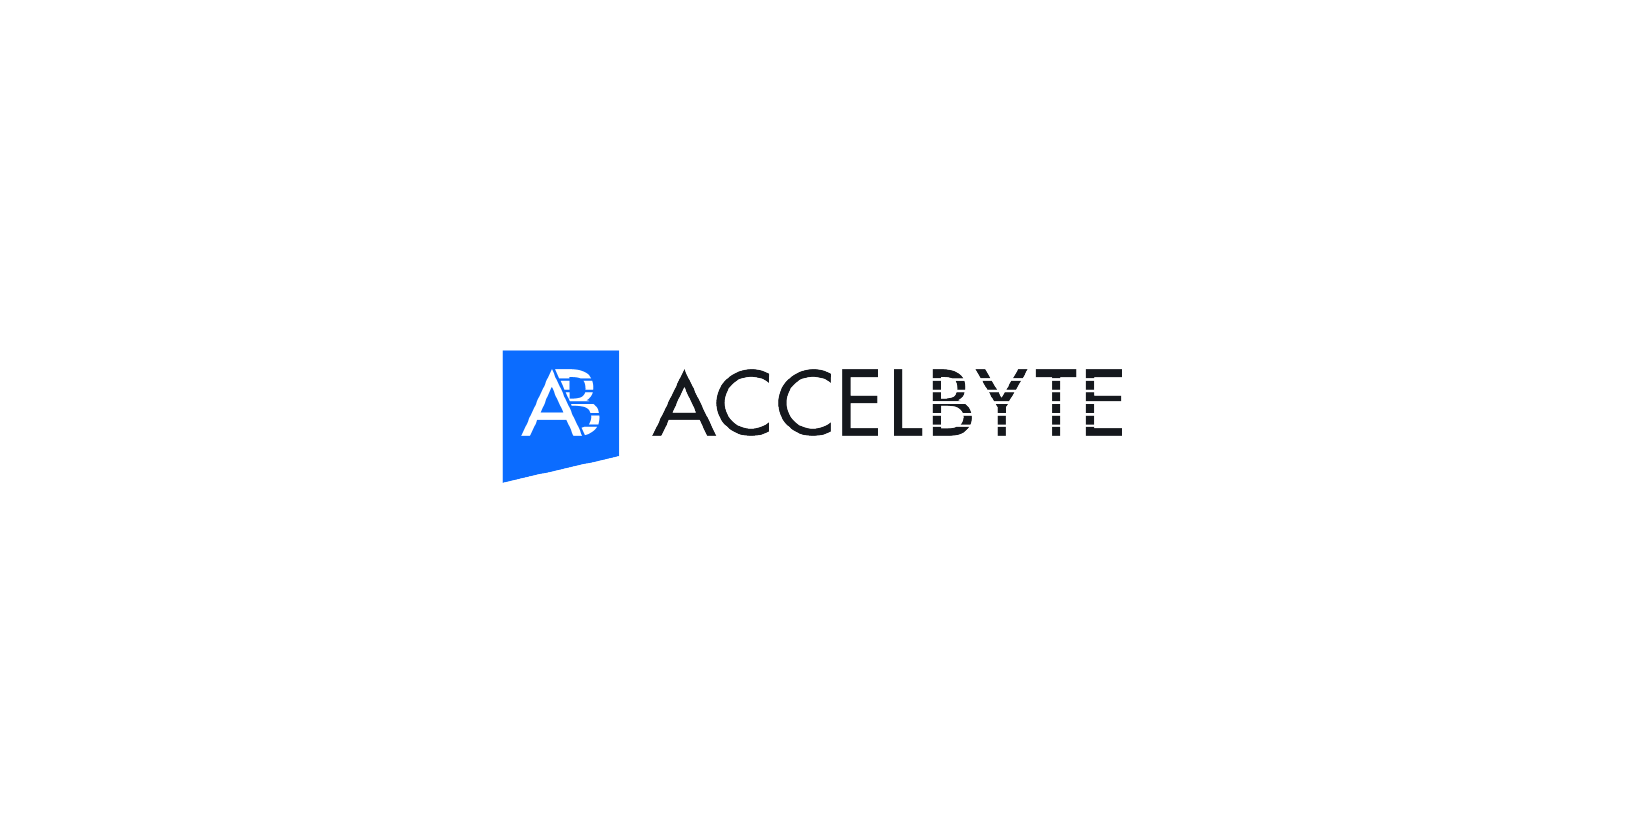 Vision Fund investment portfolio company AccelByte's logo